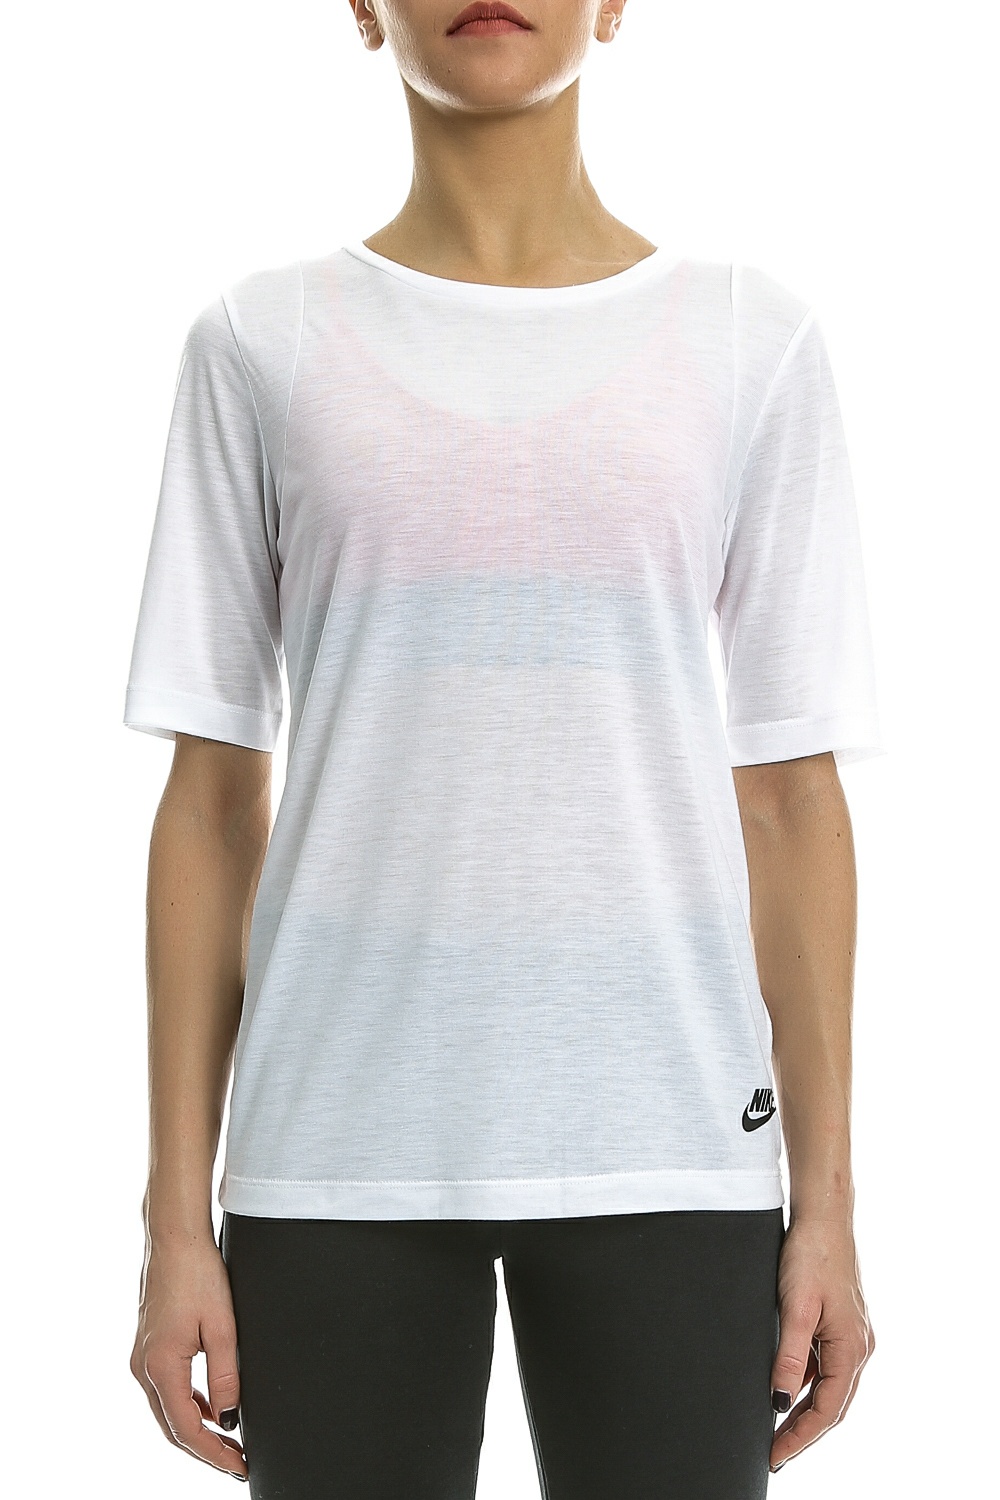 NIKE - Γυναικεία κοντομάνικη μπλούζα Nike λευκή Γυναικεία/Ρούχα/Αθλητικά/T-shirt-Τοπ